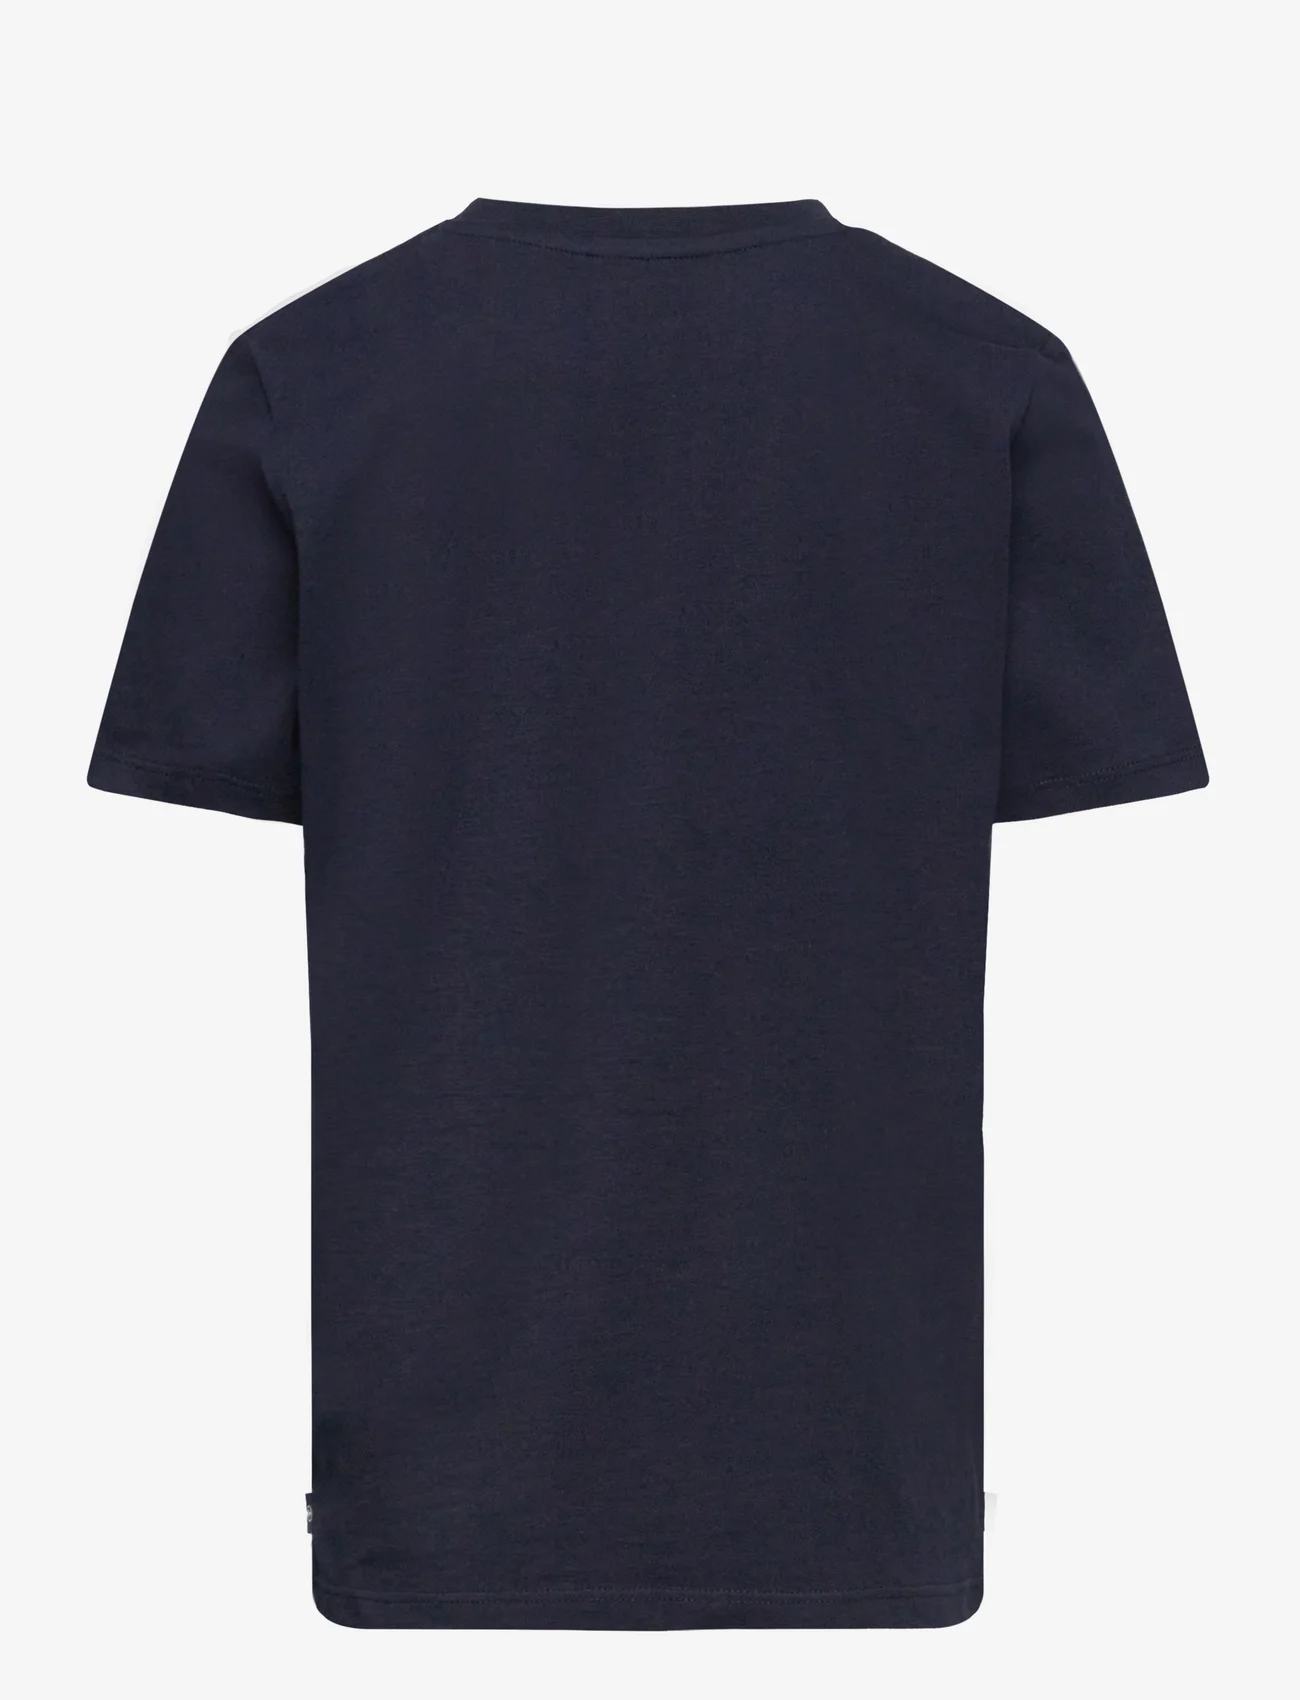 Tom Tailor - printed t-shirt - short-sleeved t-shirts - sky captain blue - 1